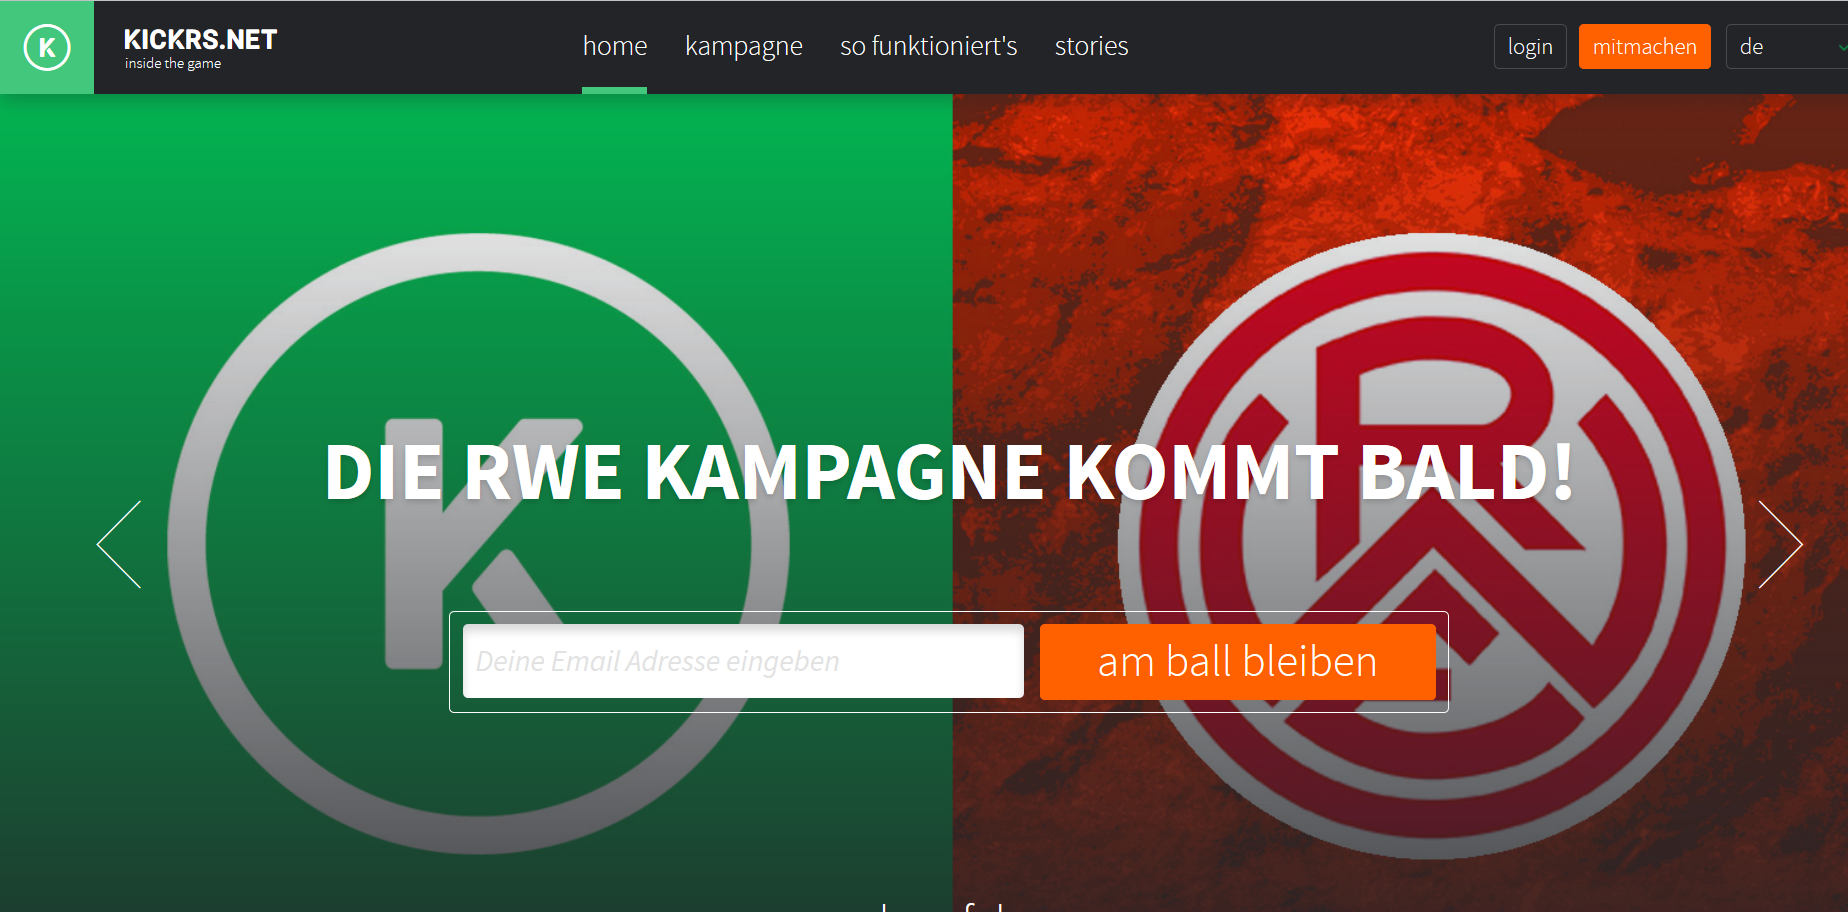 Kickrs.net RWE